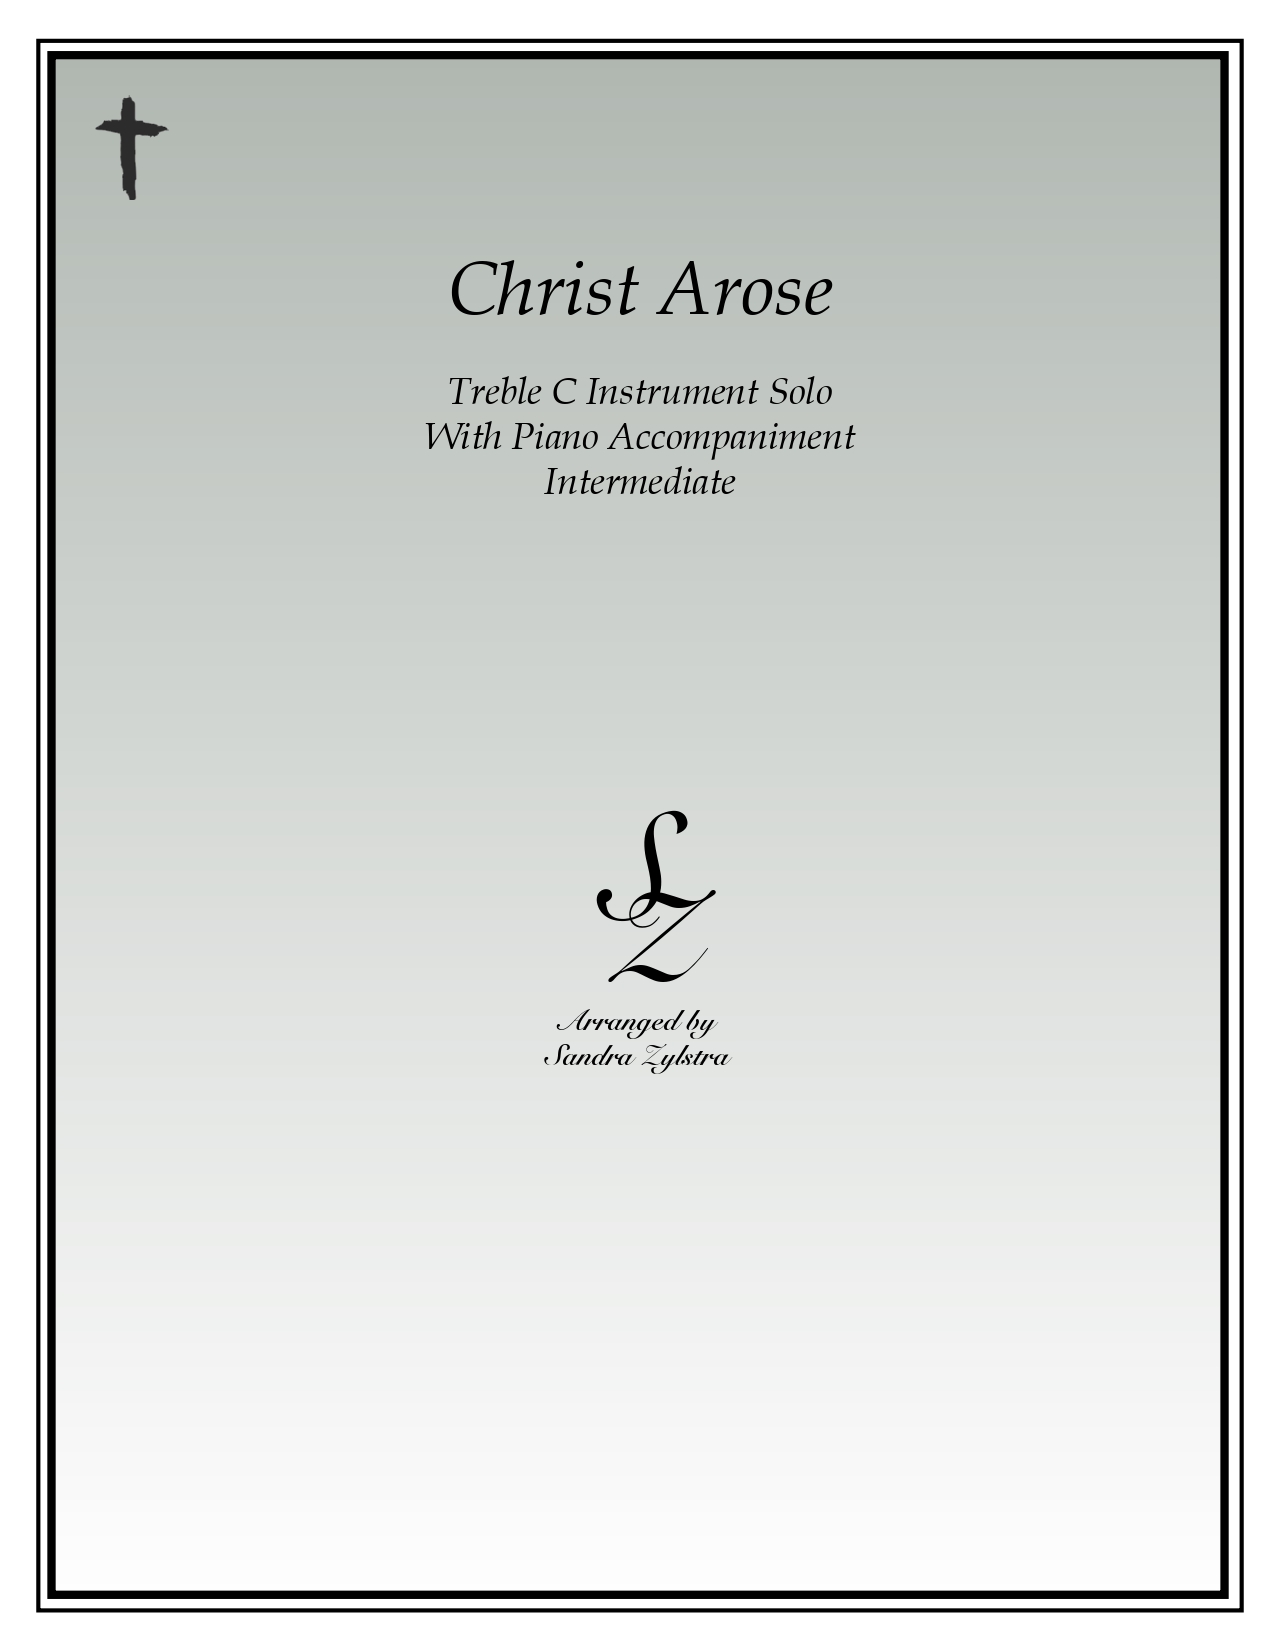 Christ Arose treble C instrument solo part cover page 00011